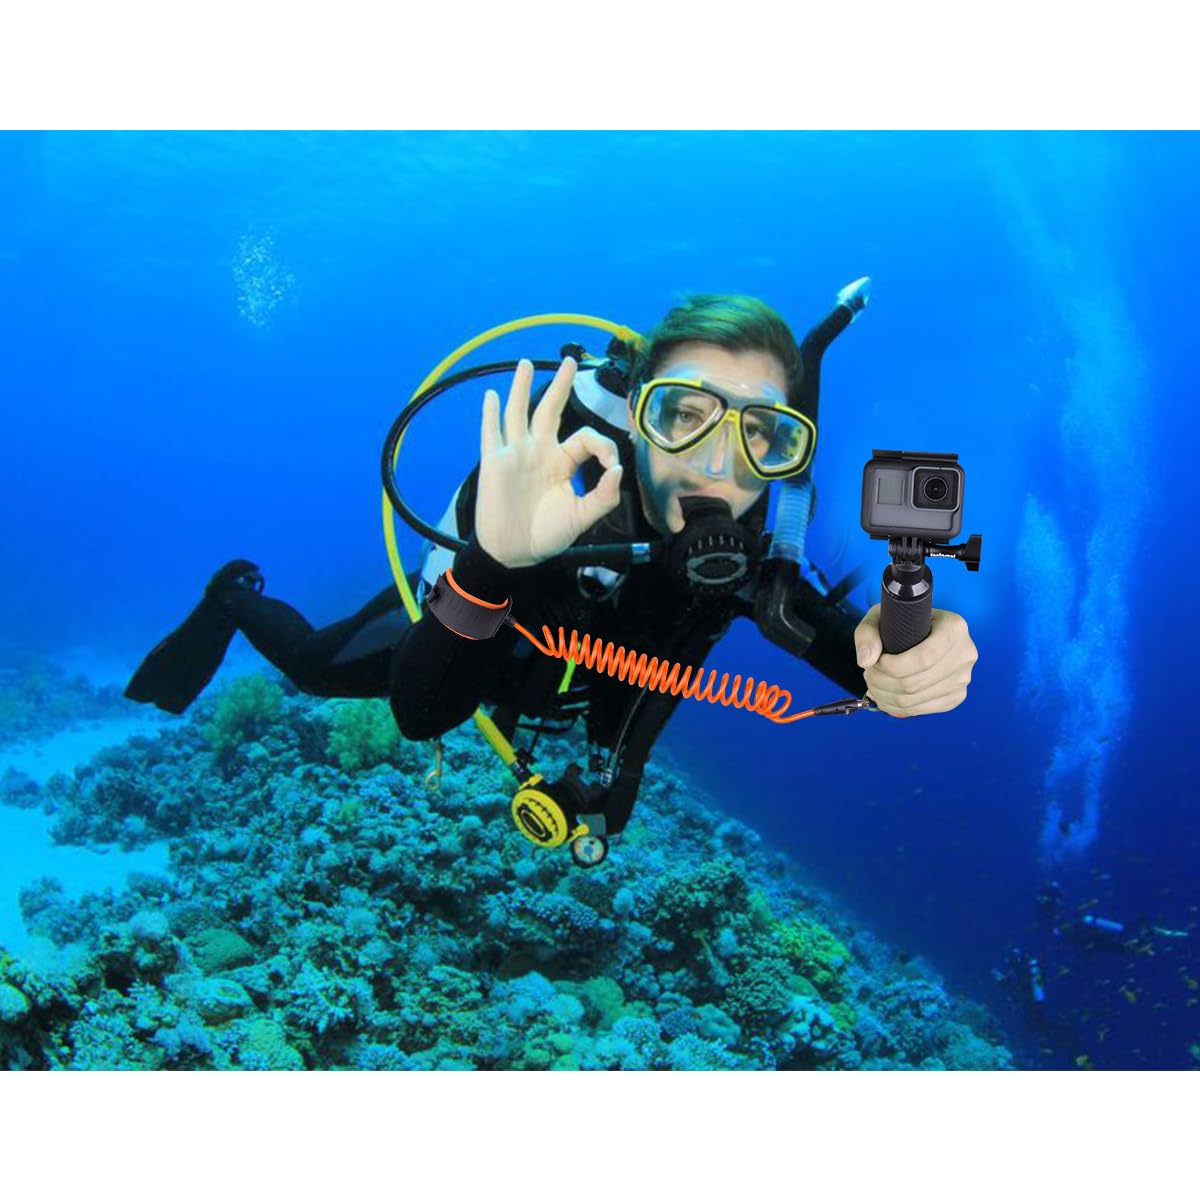 Action Camera Non-Slip Handler Floating Hand Grip Holder Mount + Steel-cored Safety Wrist Strap for GoPro Sony Insta360 Olympus Akaso Underwater Camcorder Diving Surfing Snorkeling Rafting Kayak Scuba